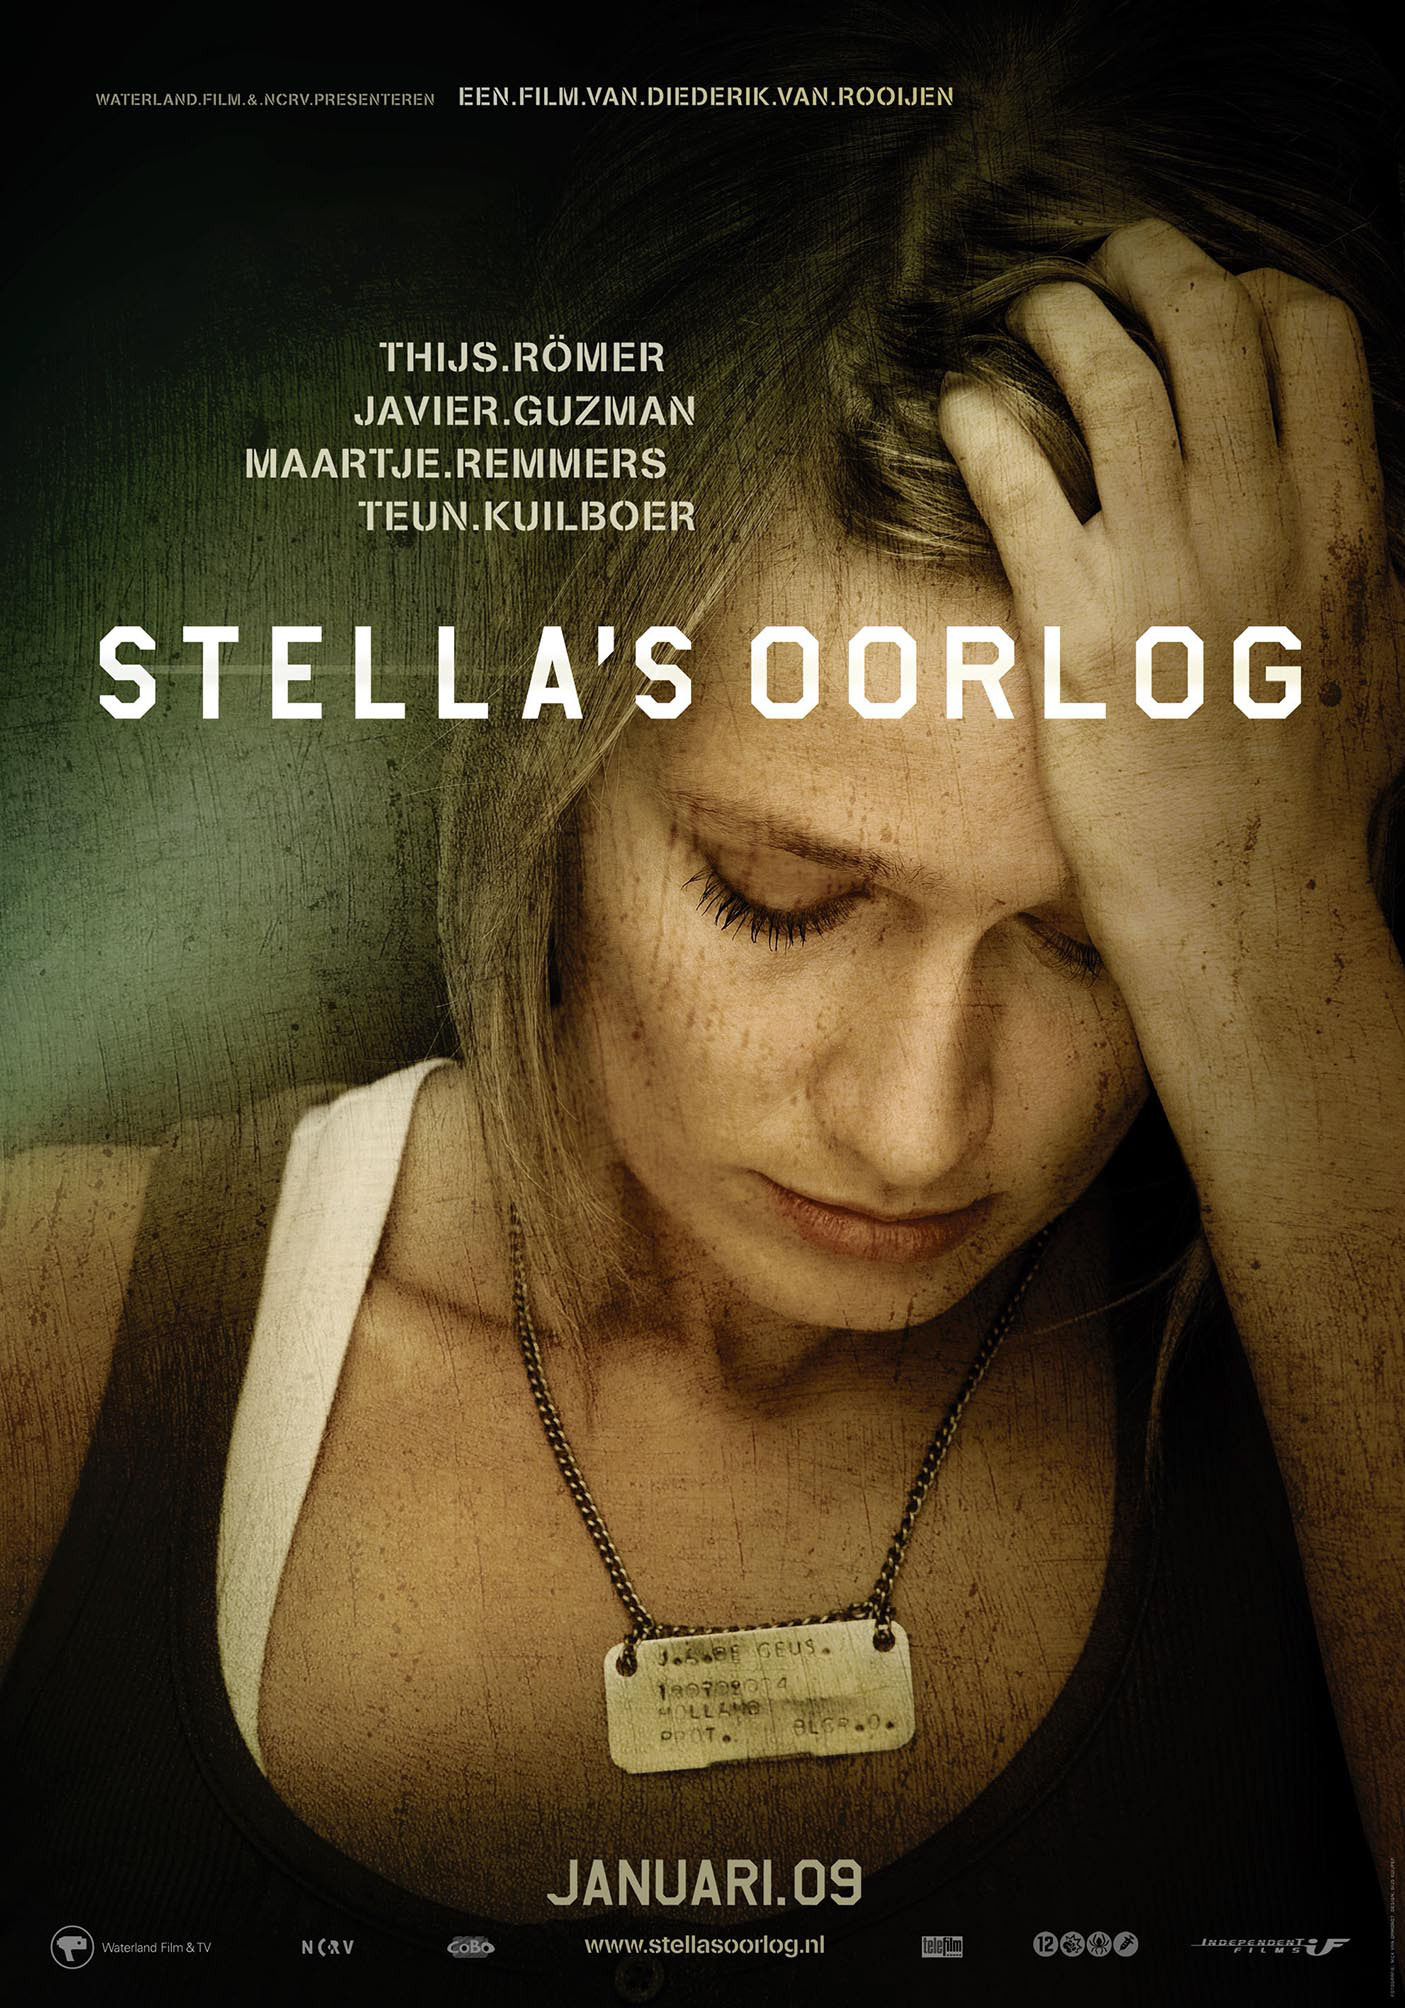 Mega Sized Movie Poster Image for Stella's oorlog (#1 of 2)